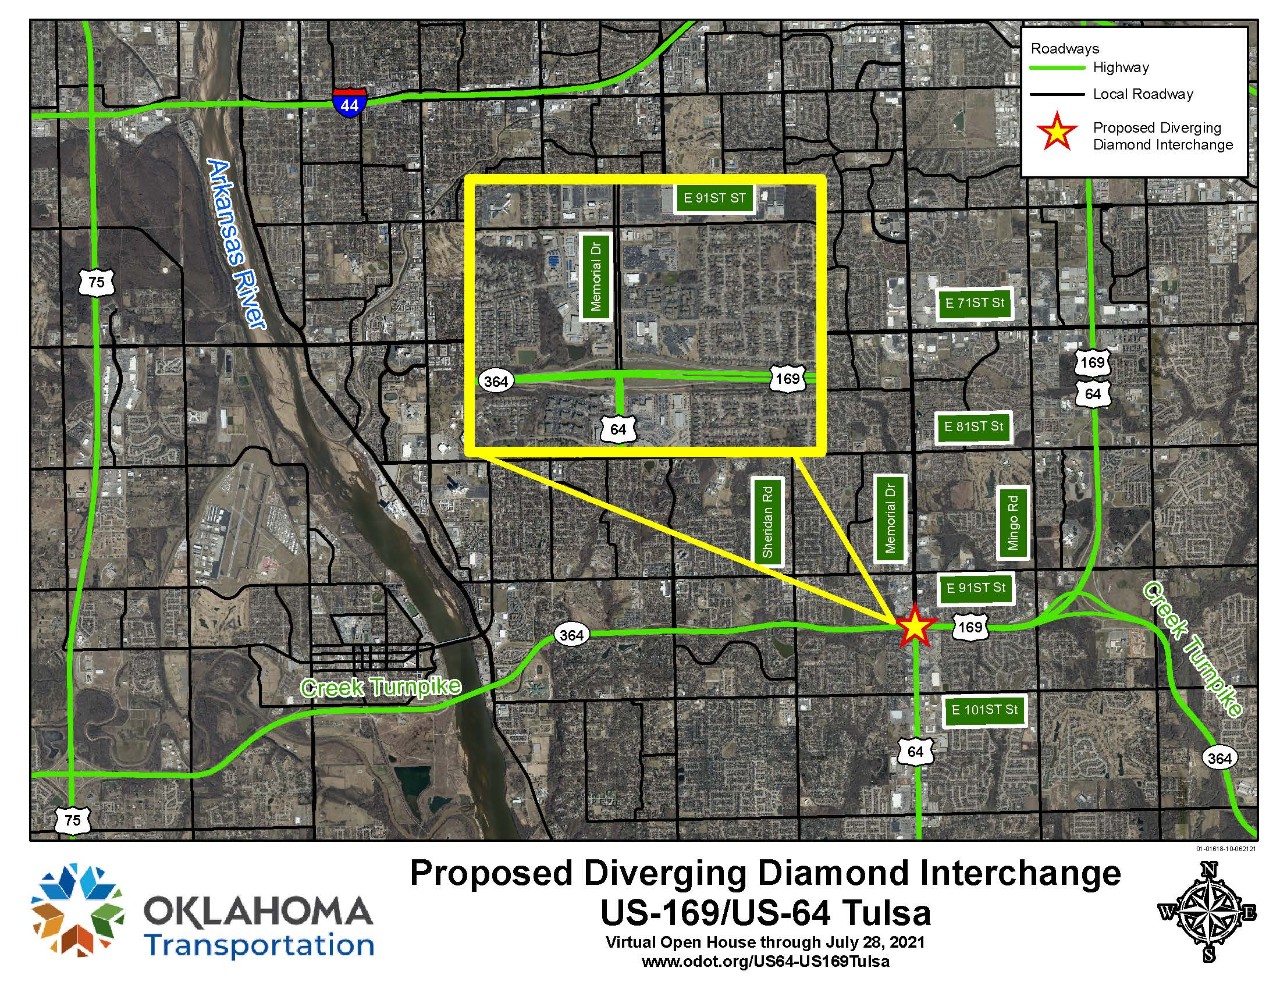 Proposed Diverging Diamond Interchange US-169/US-64 Tulsa